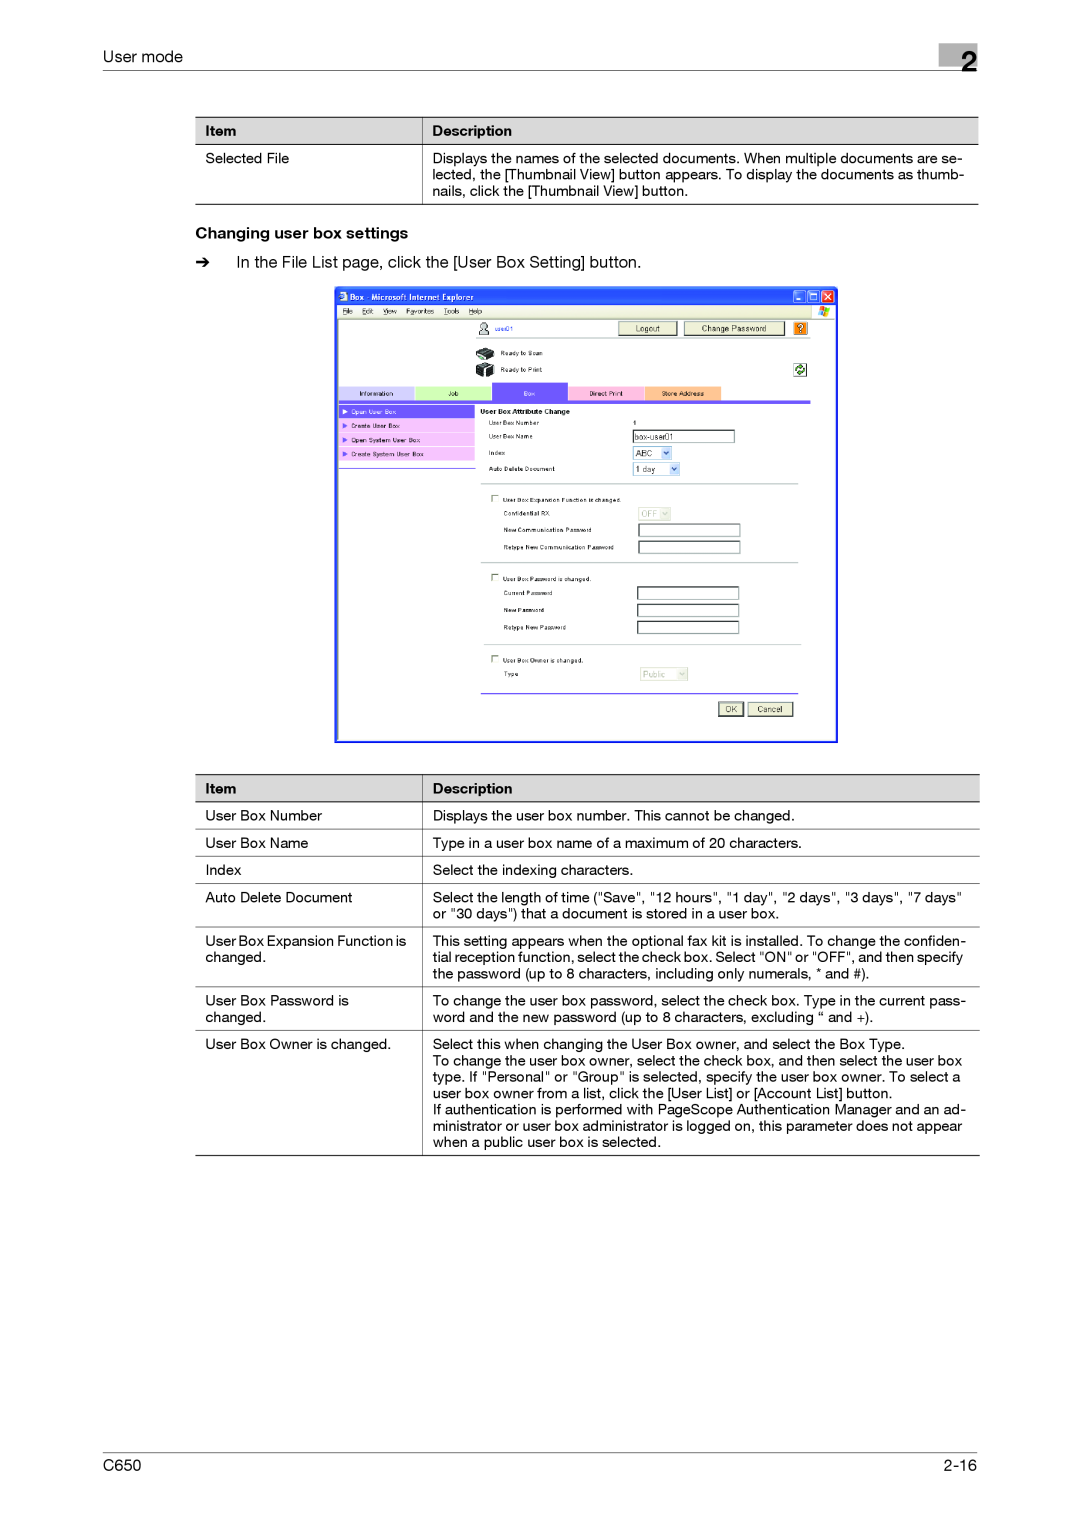 Konica Minolta C650 manual User mode, Changing user box settings, 2-16 